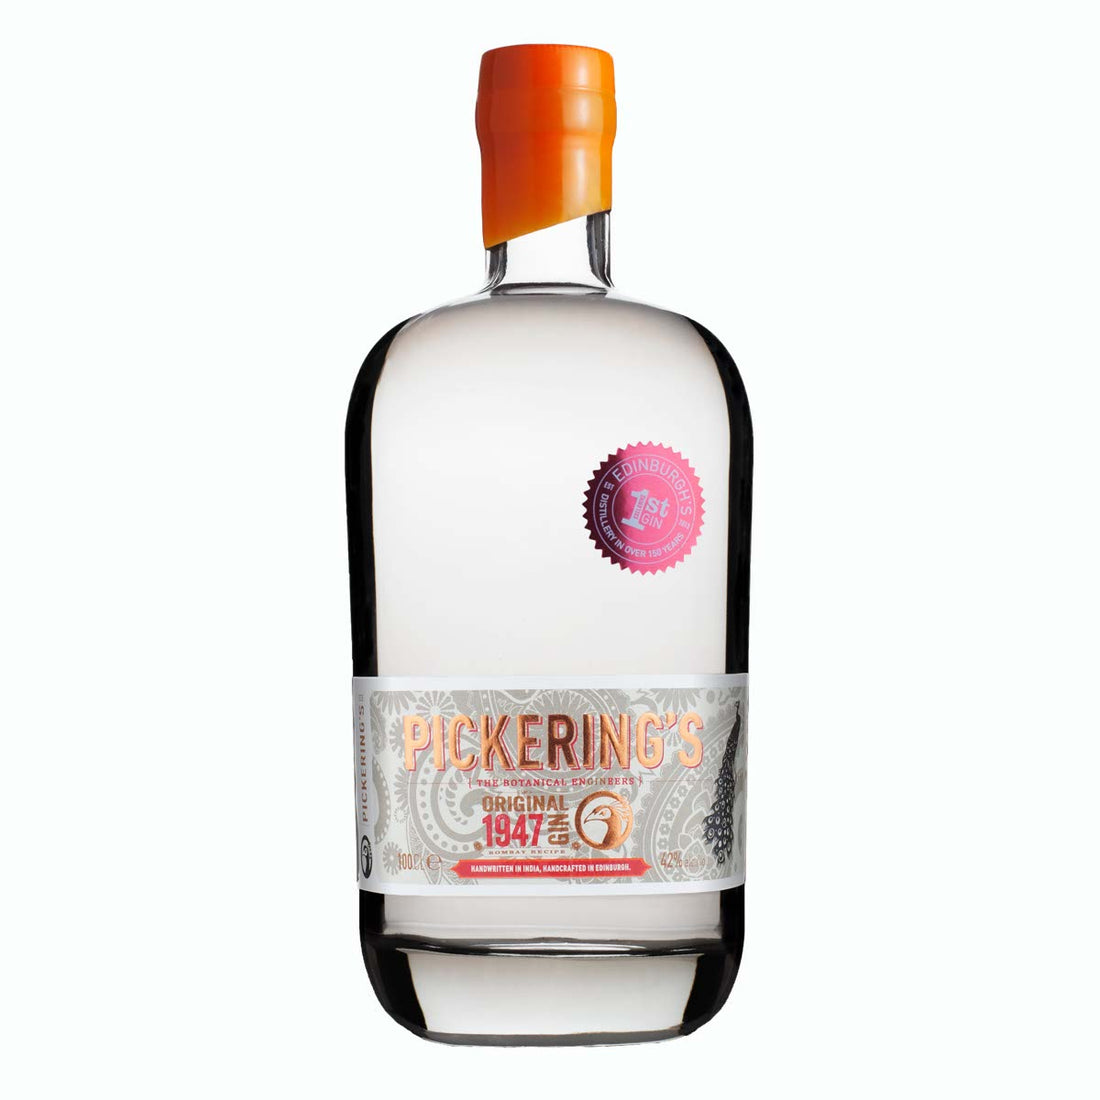 Pickering's Original 1947 Gin